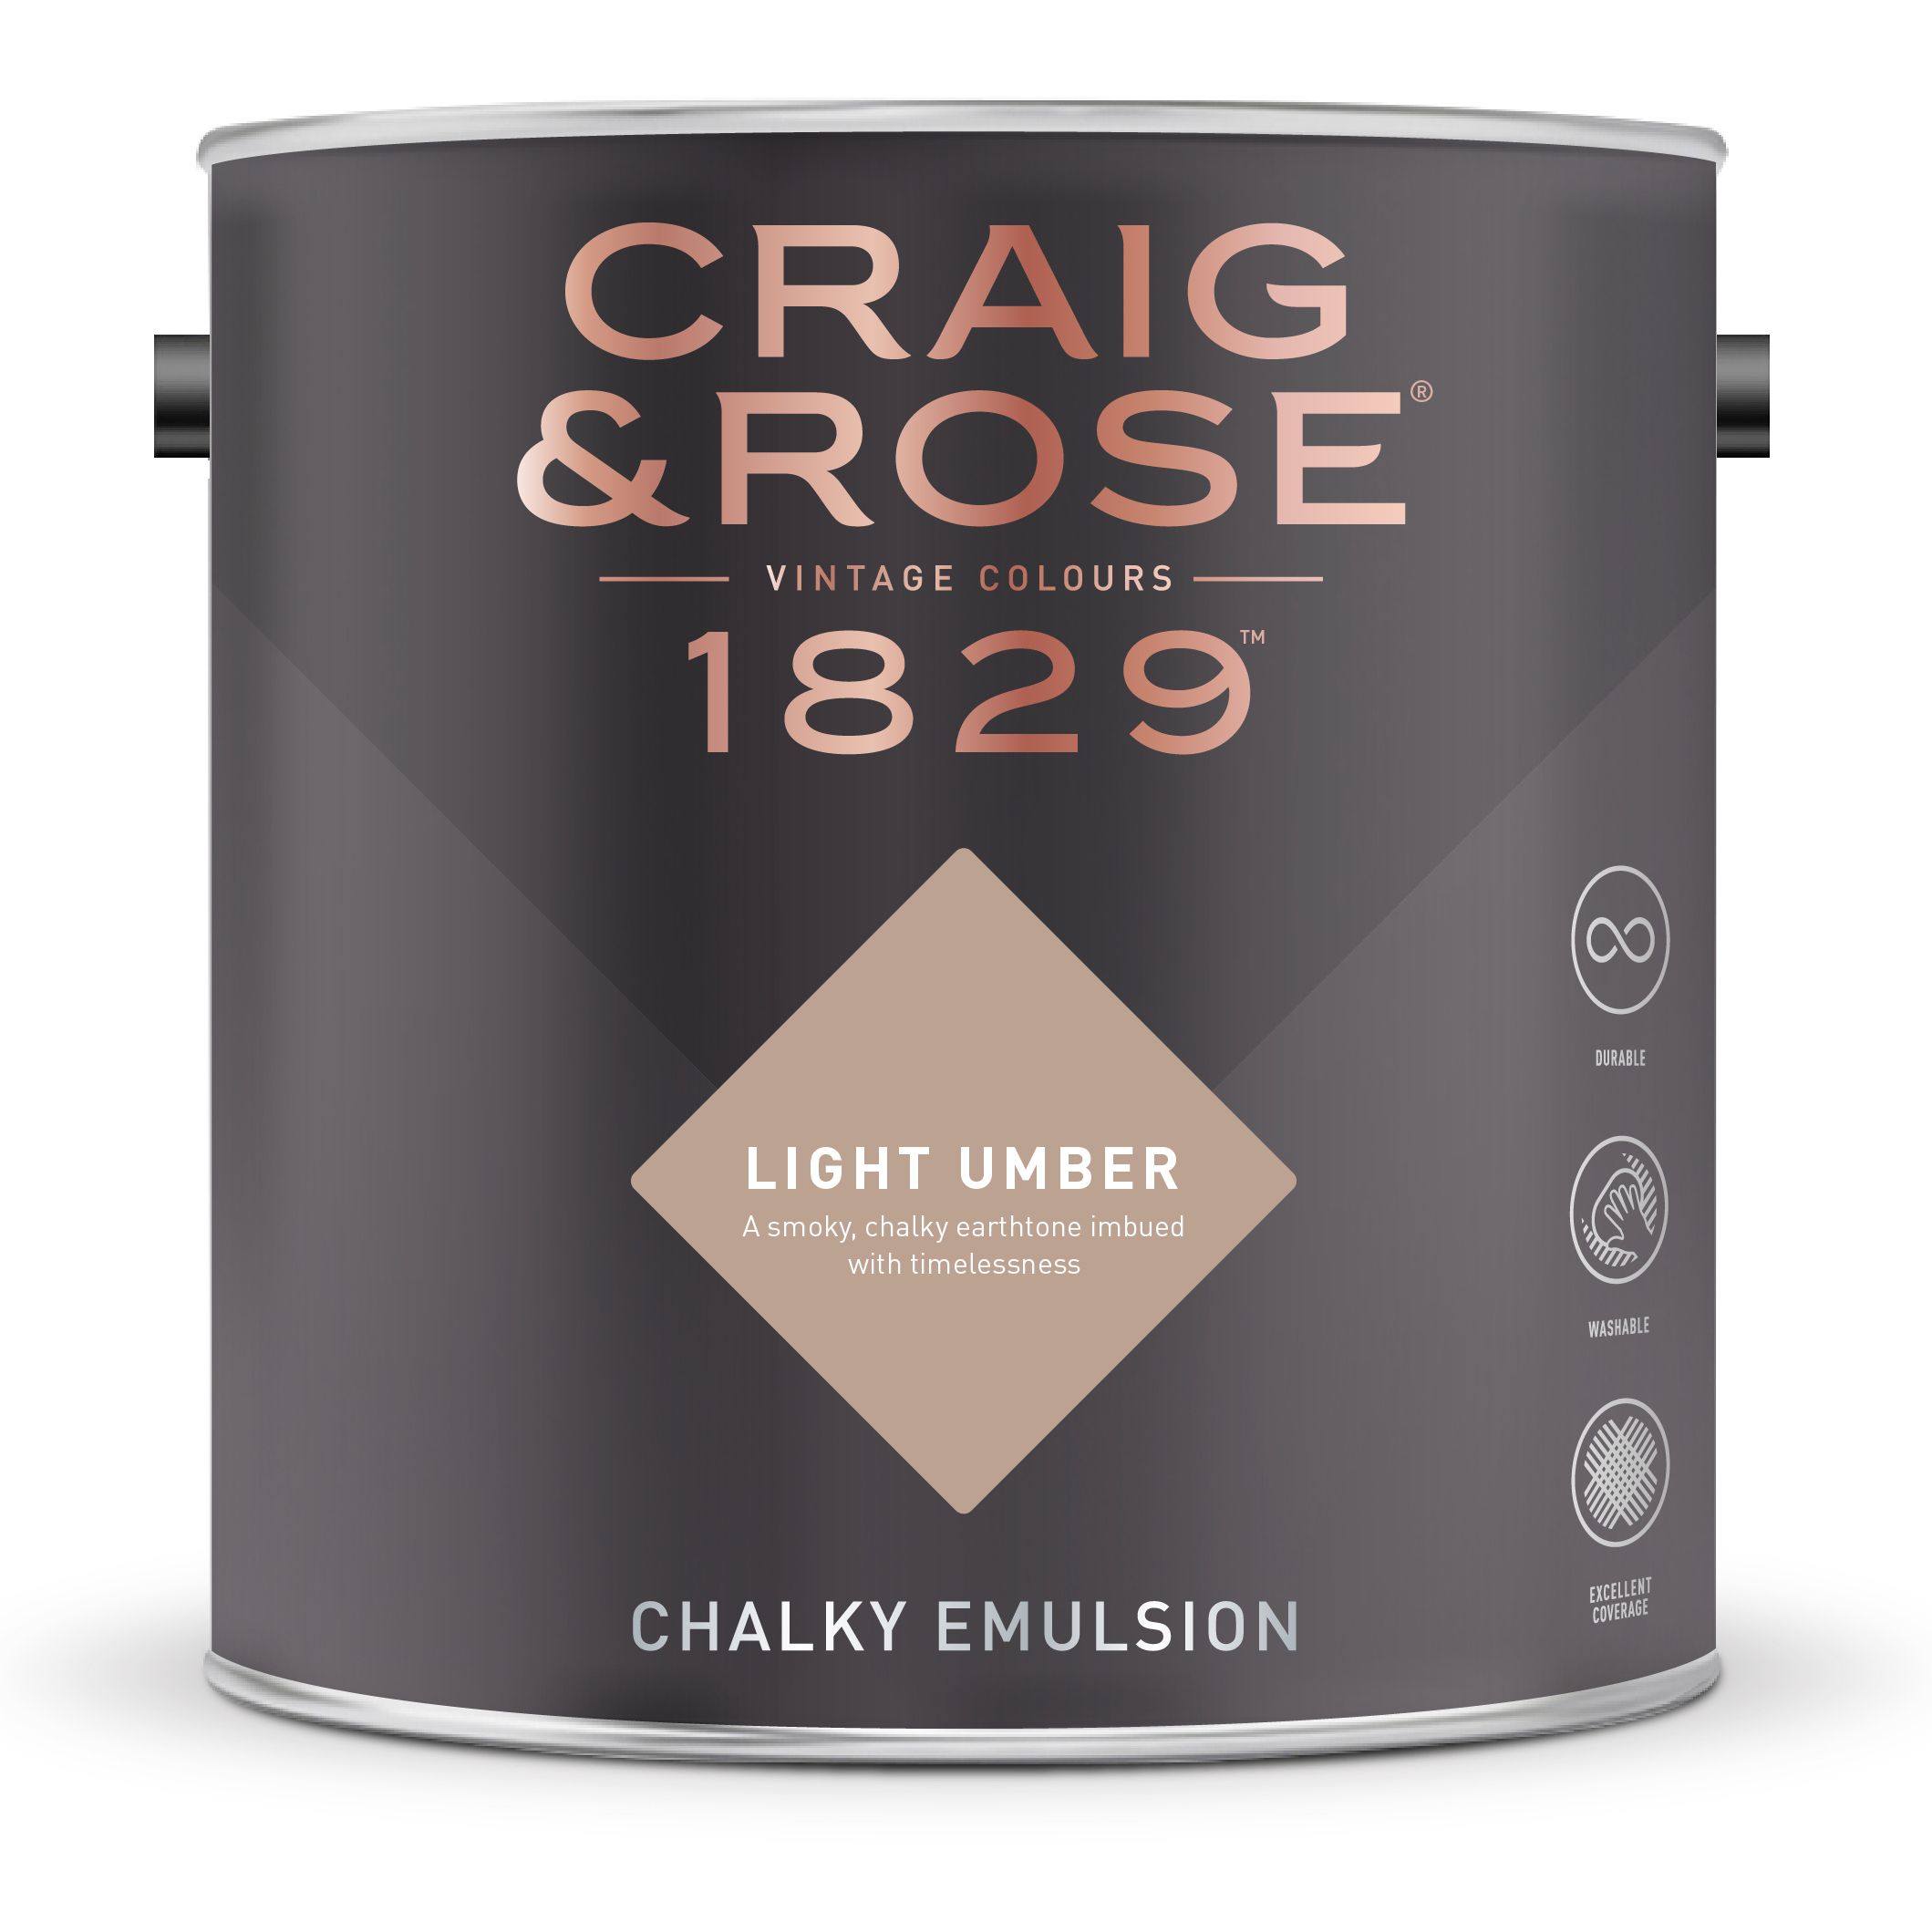 Craig & Rose 1829 Light Umber Chalky Emulsion paint, 2.5L